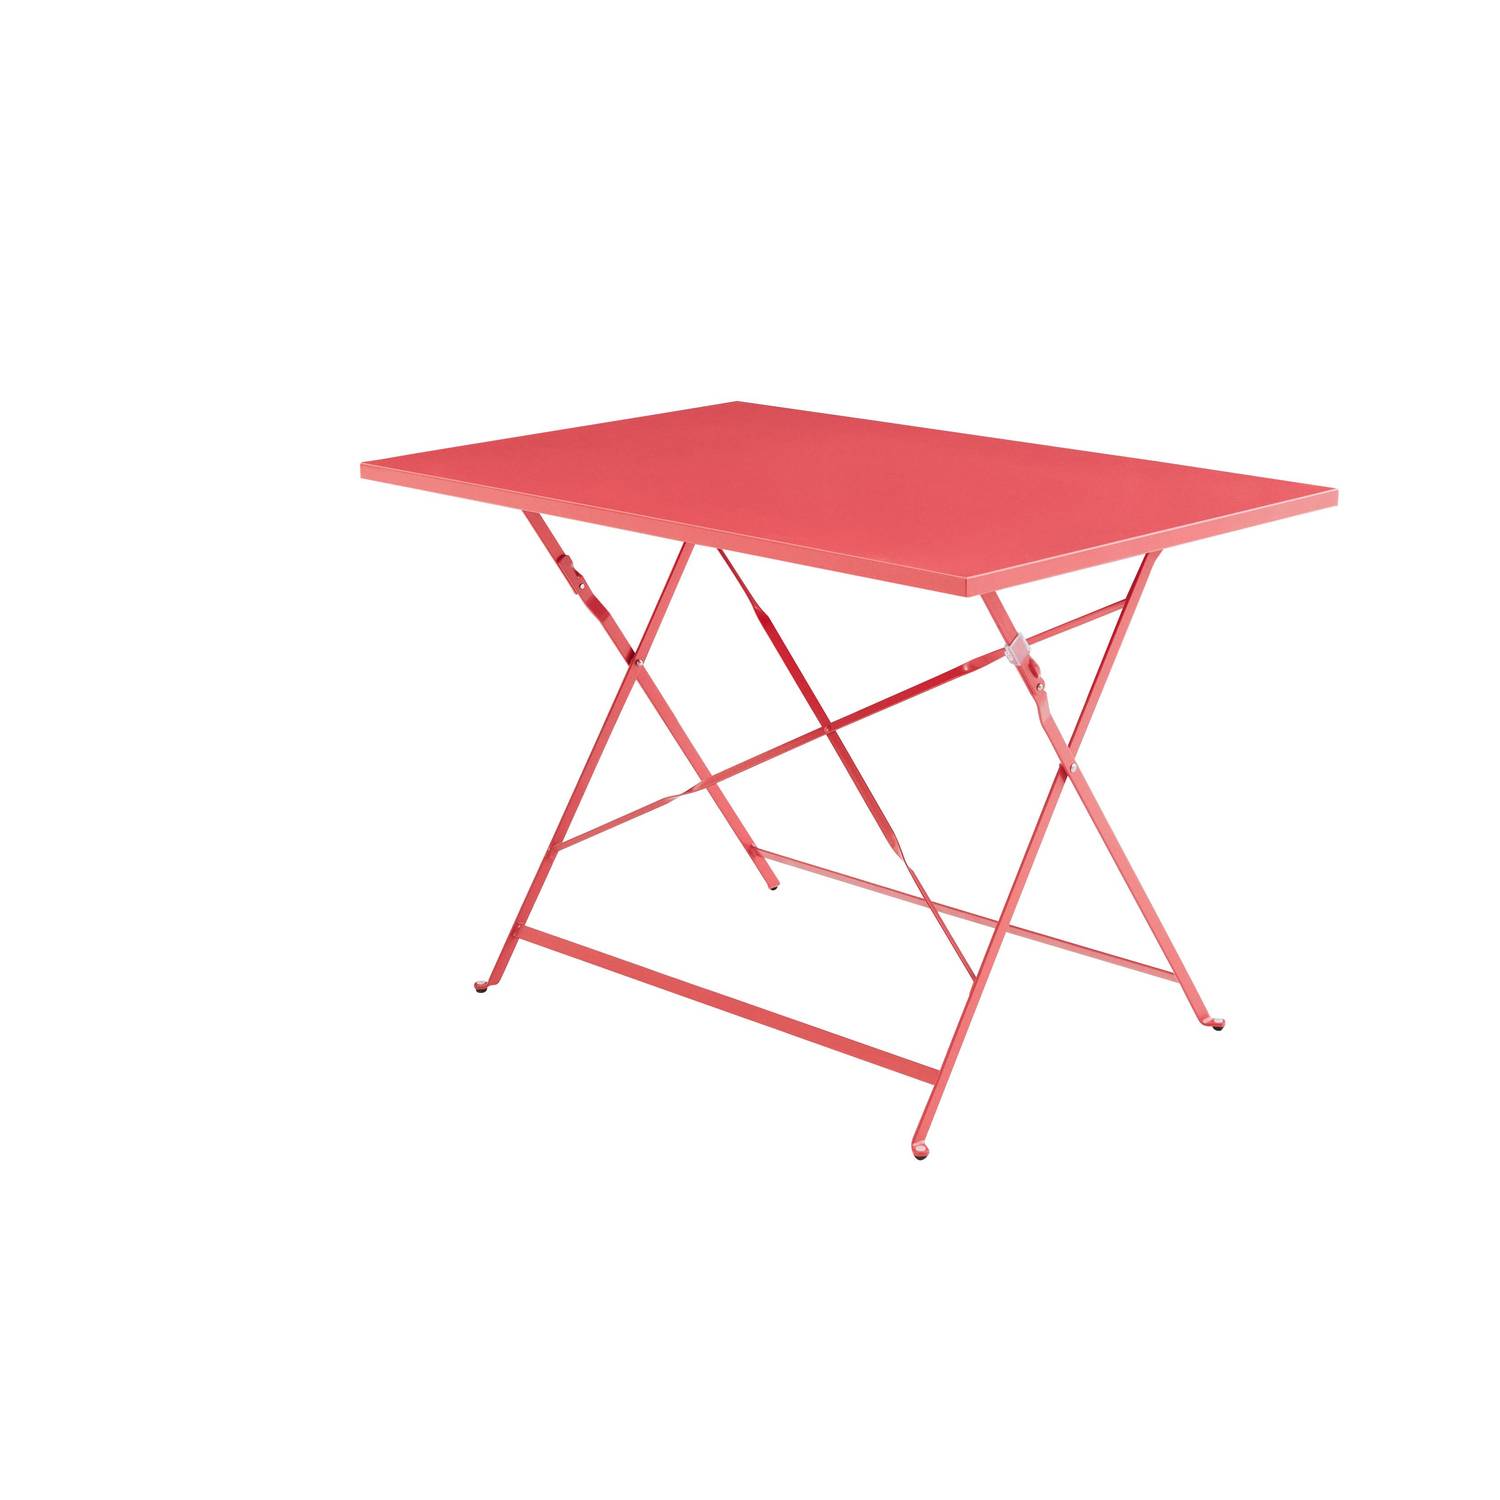 Emilia - Bistro tuintafel opvouwbaar - Rechthoekige tafel 110x70cm van staal met thermolak - Frambozenrood Photo1